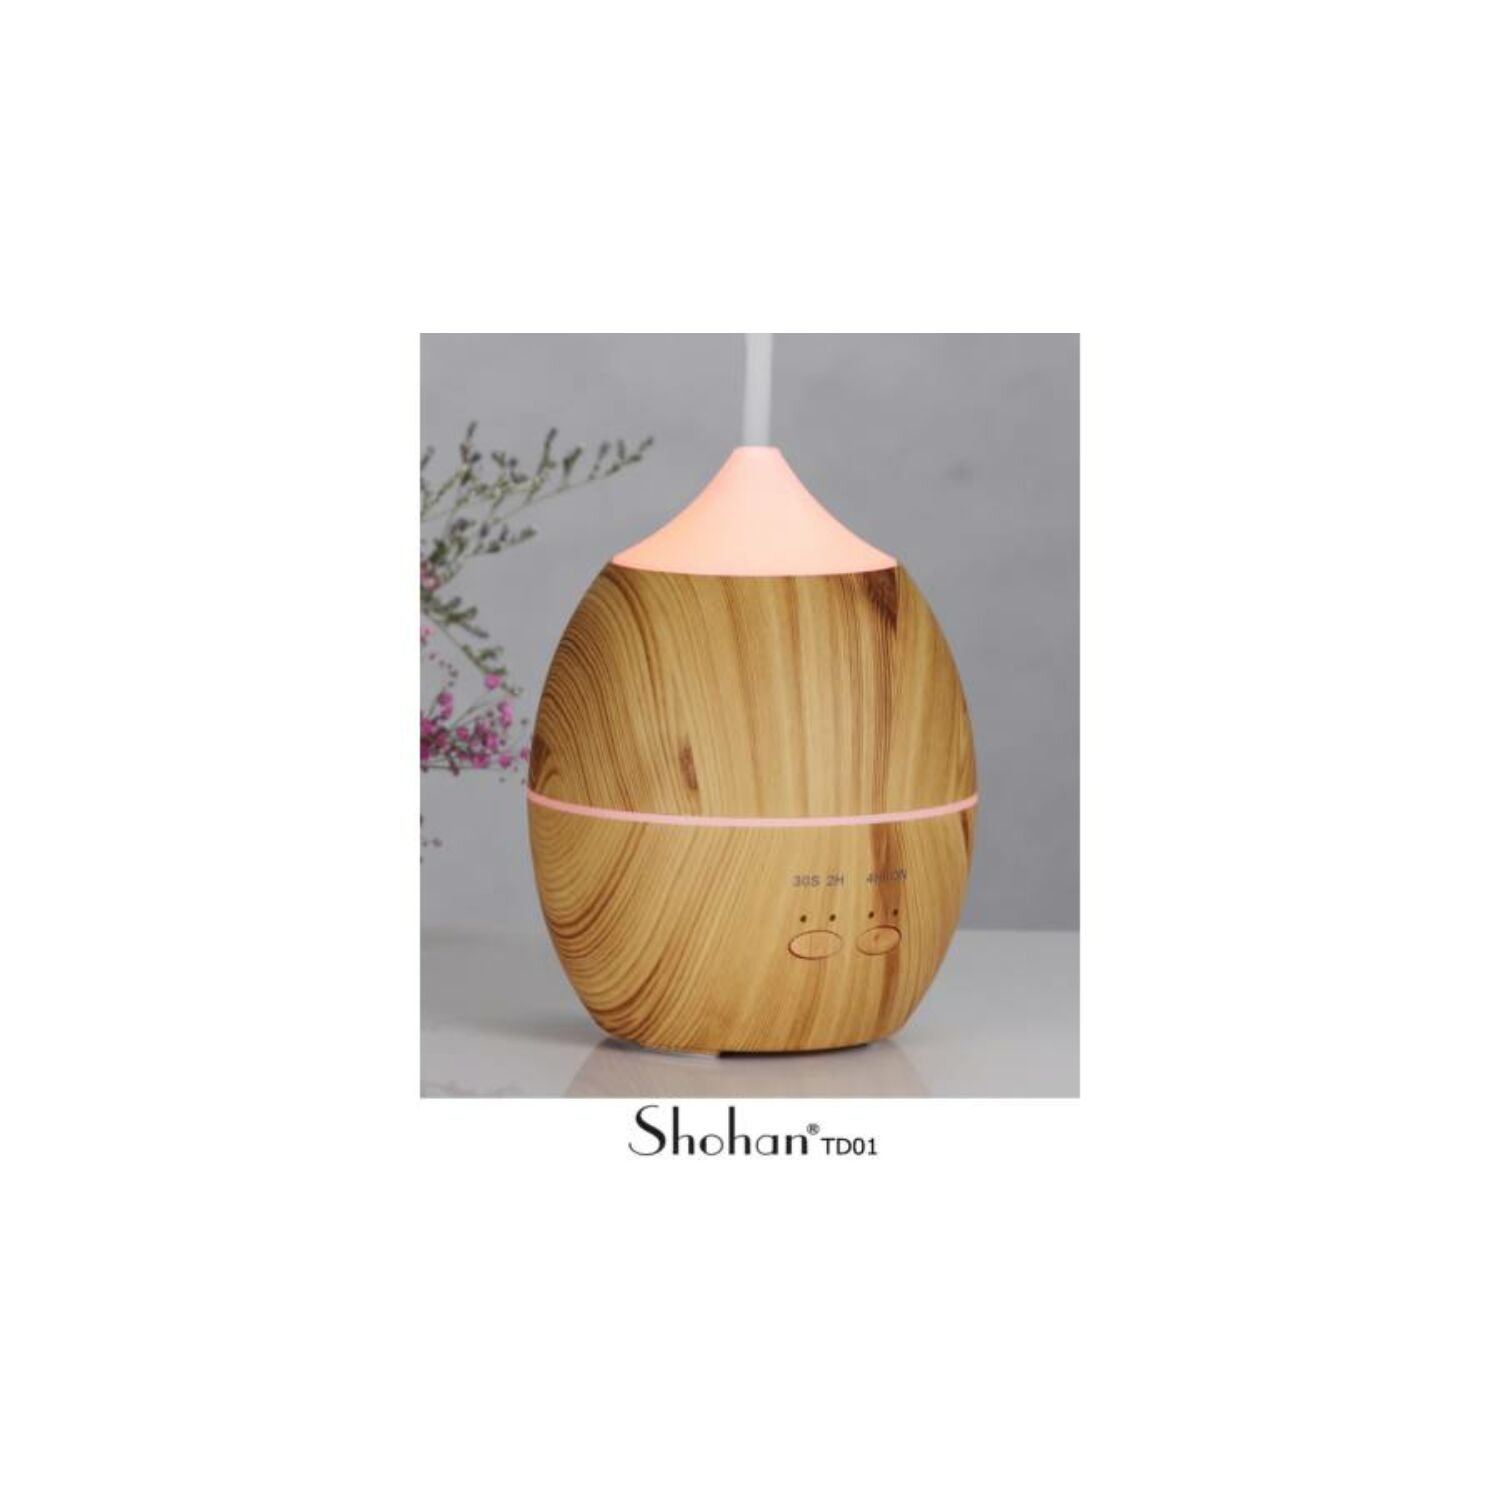 Shohan TD 01 ultrahangos aroma diffúzor, világos fa színű